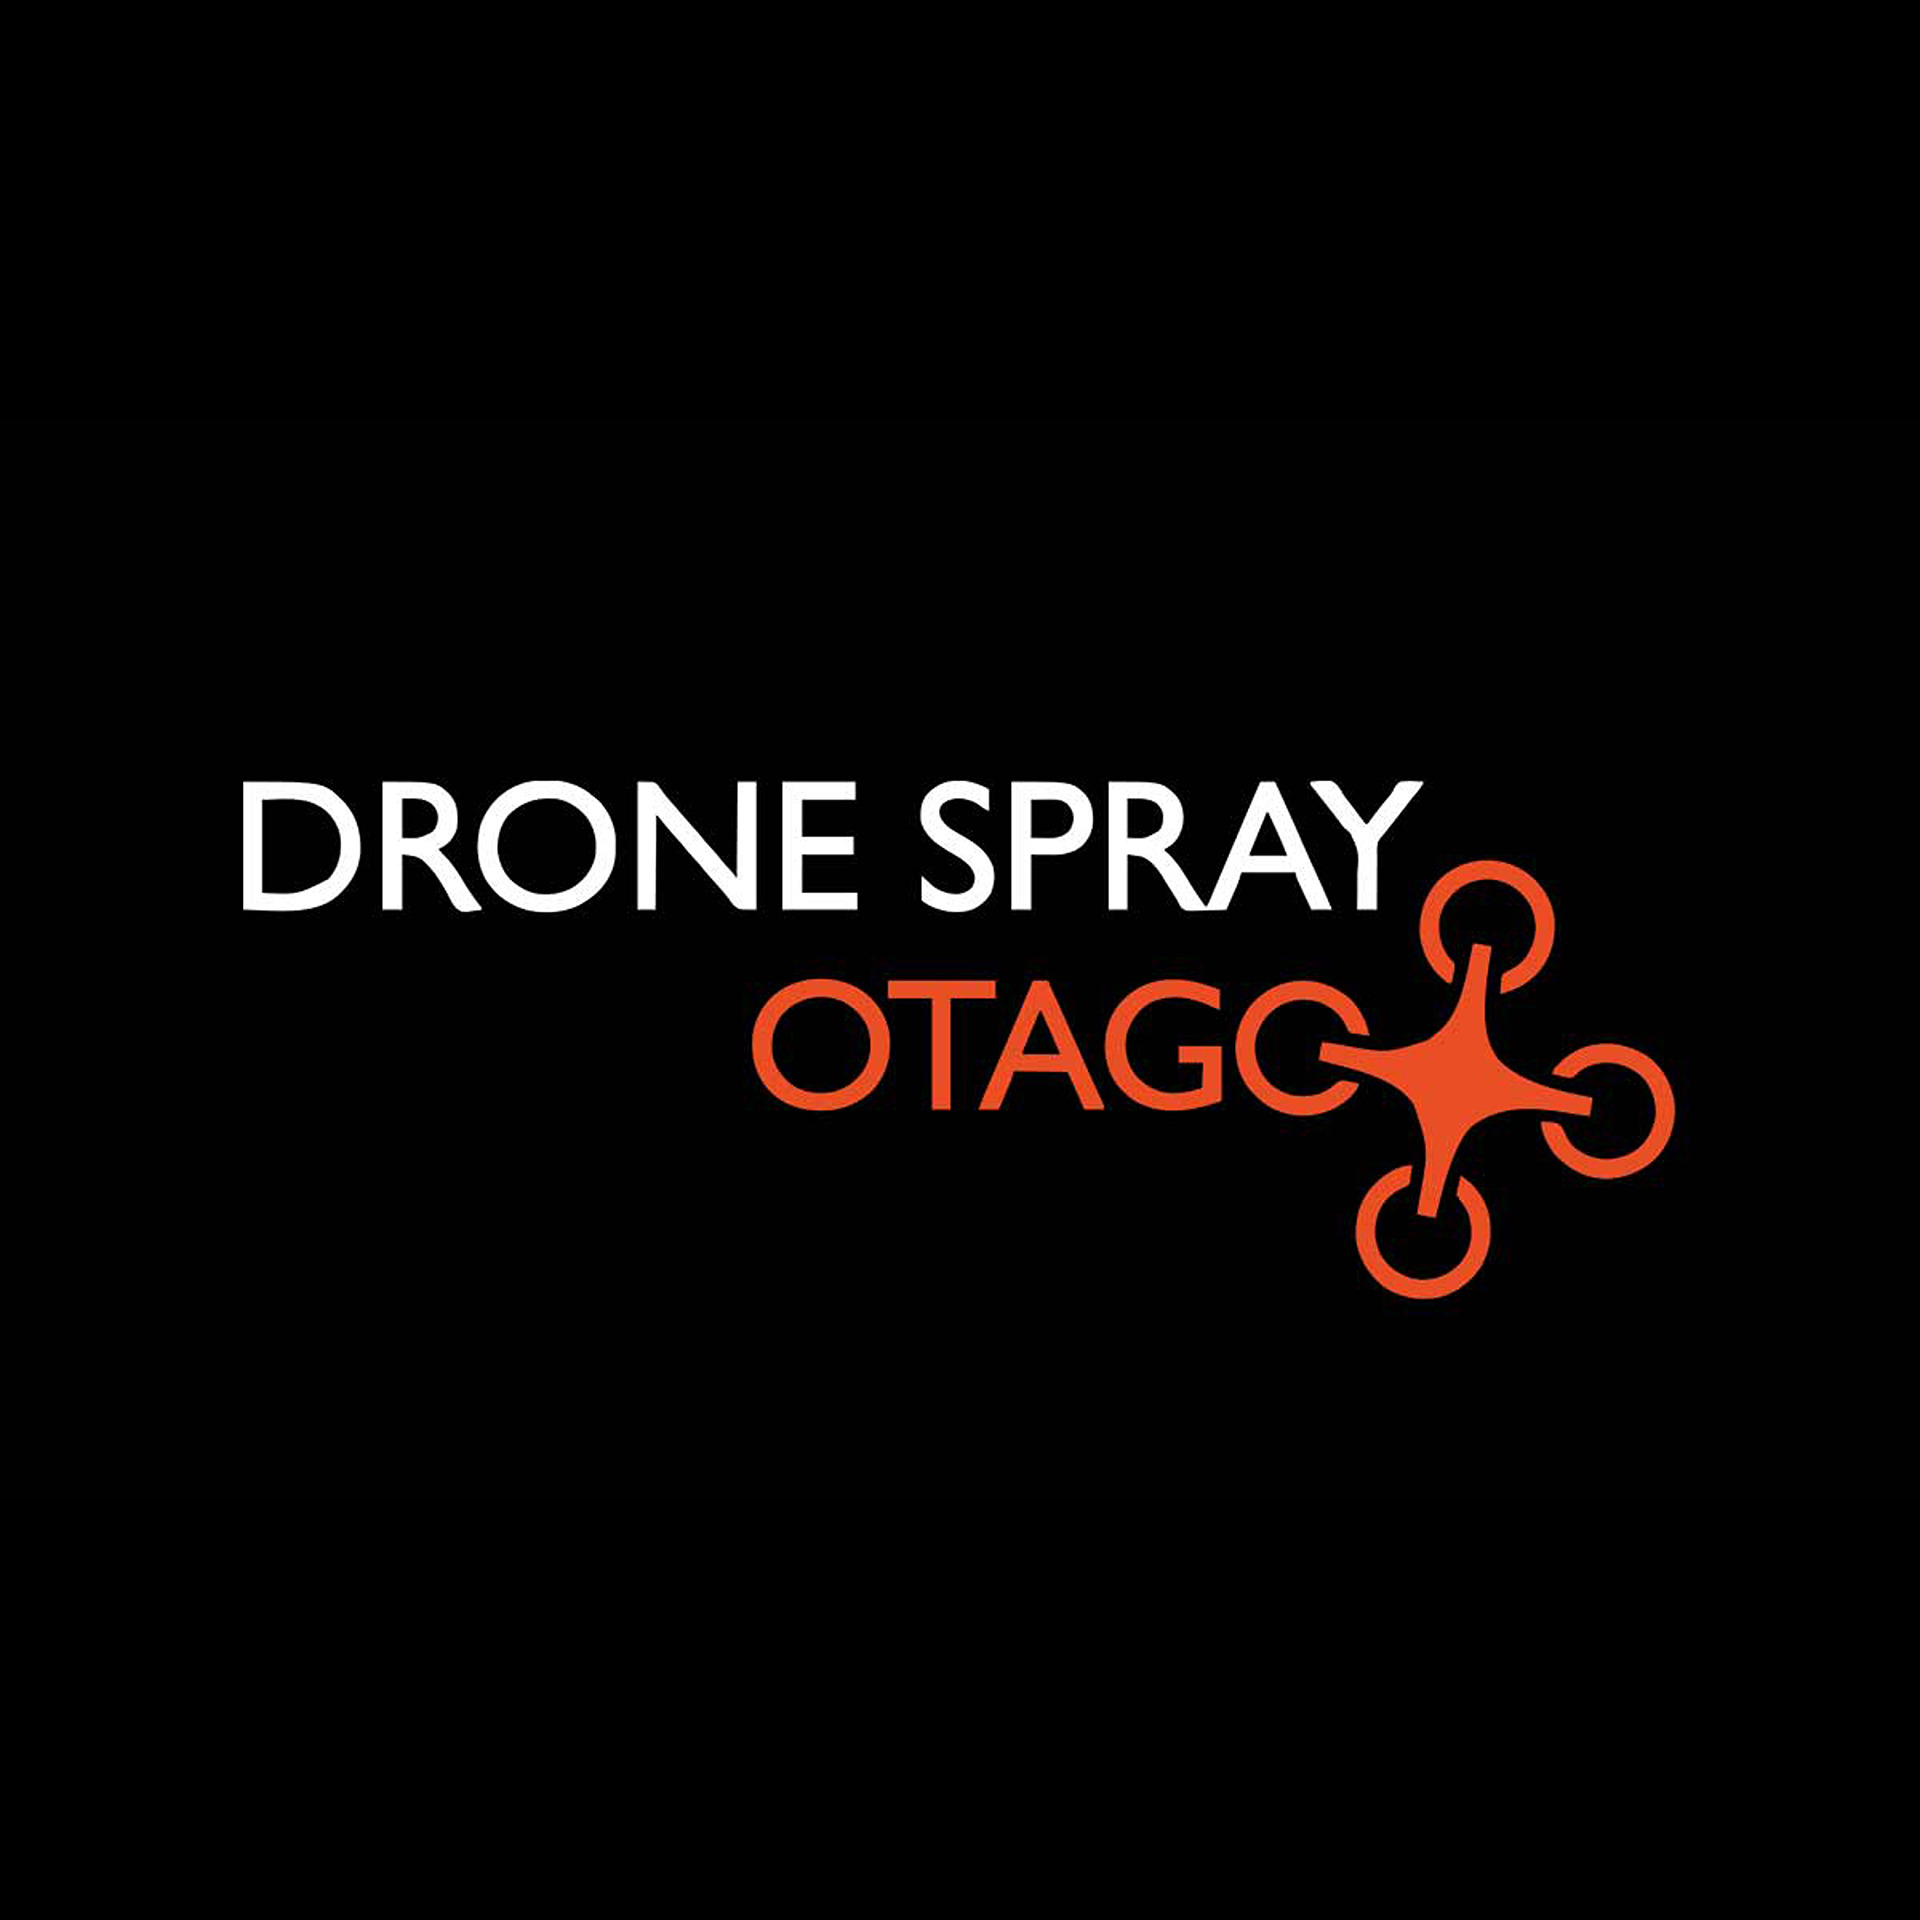 Drone Spray Otago